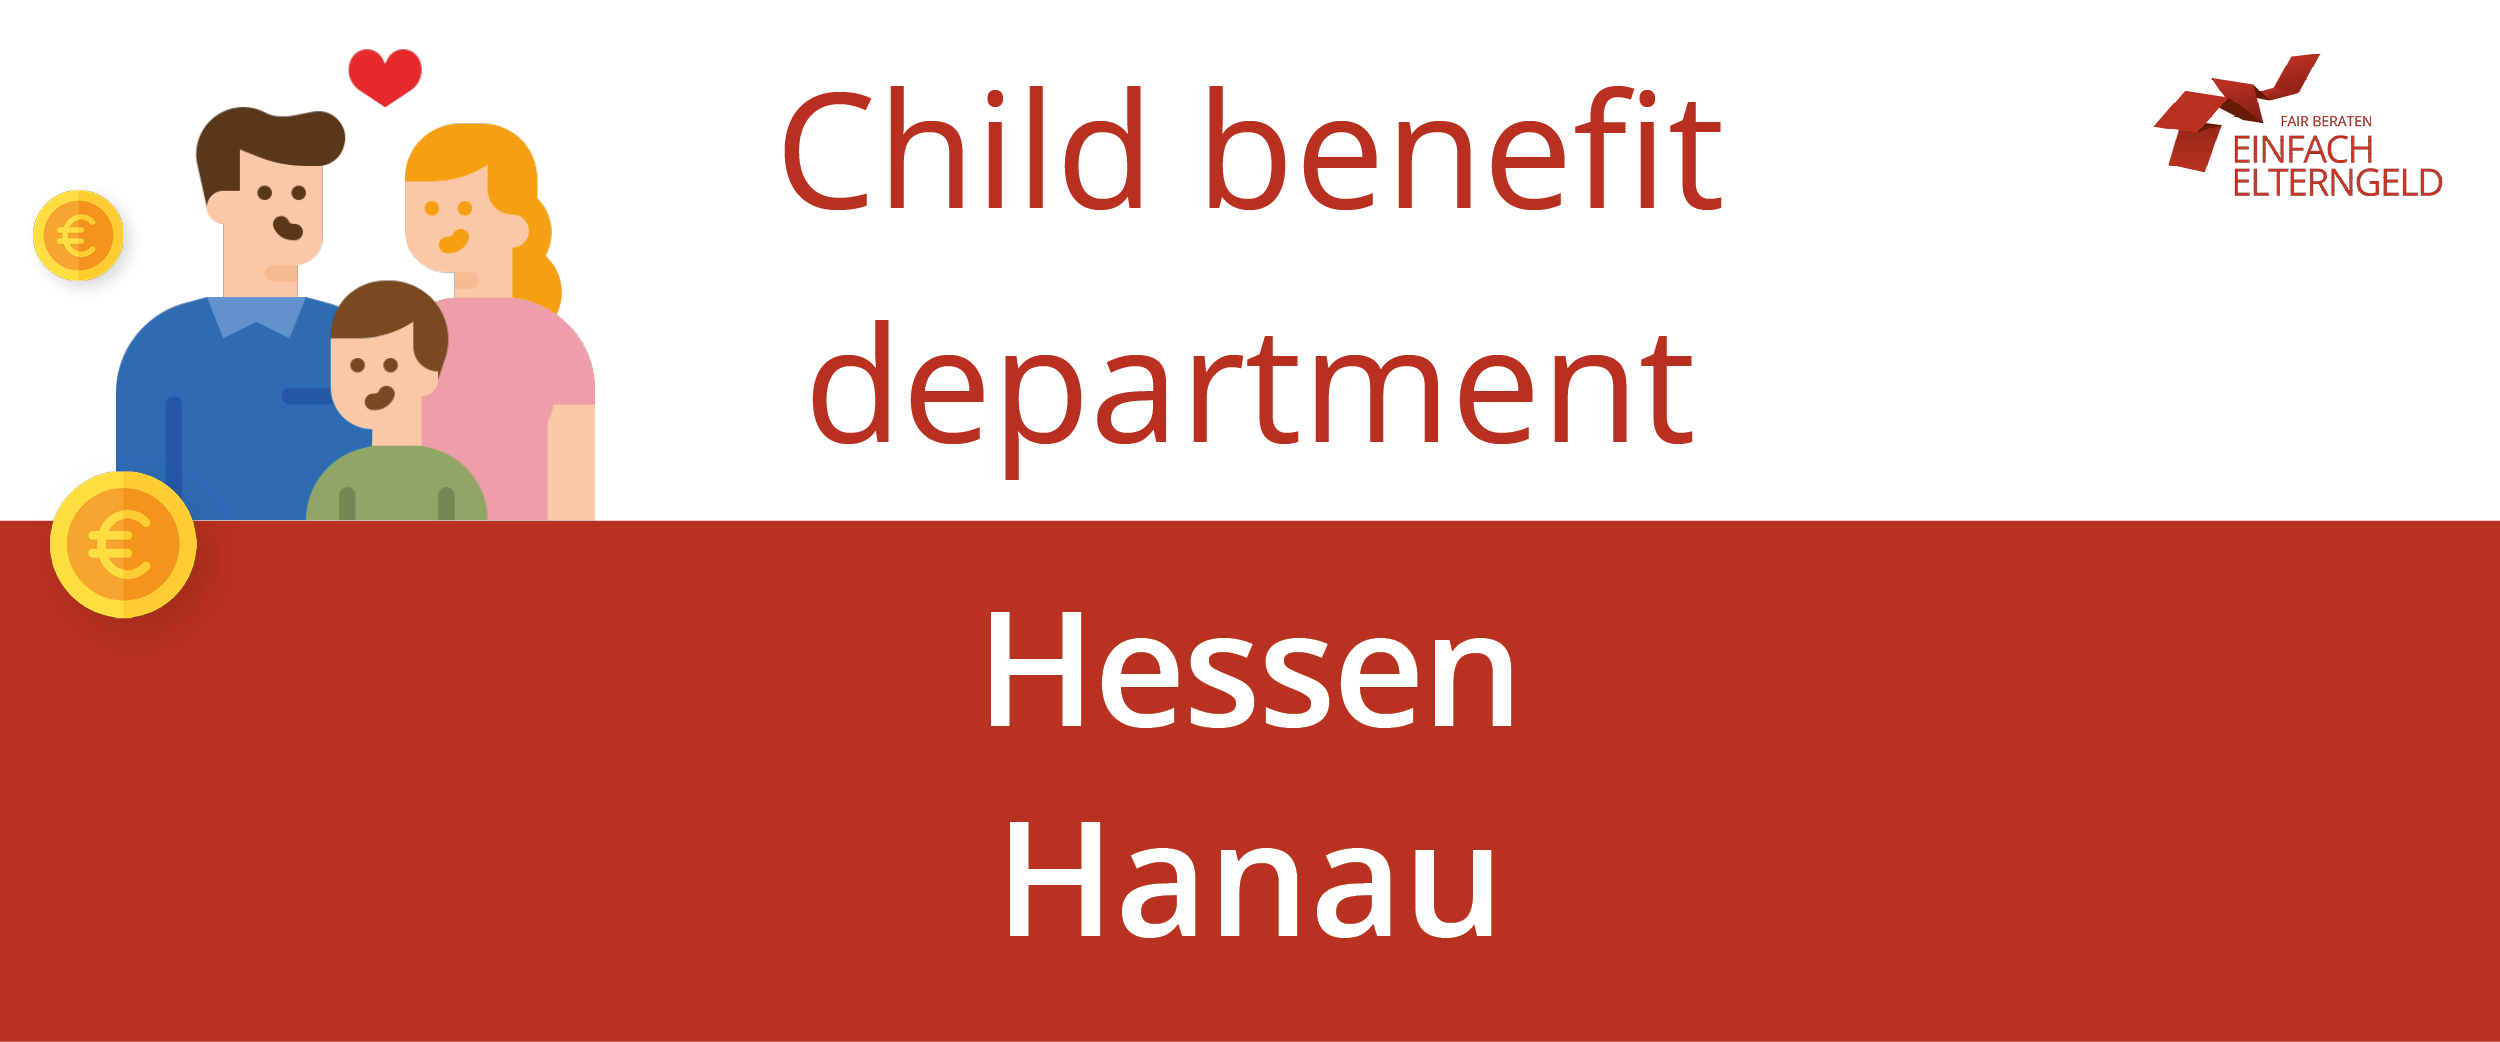 We present you the Child benefit department Hessen Hanau.